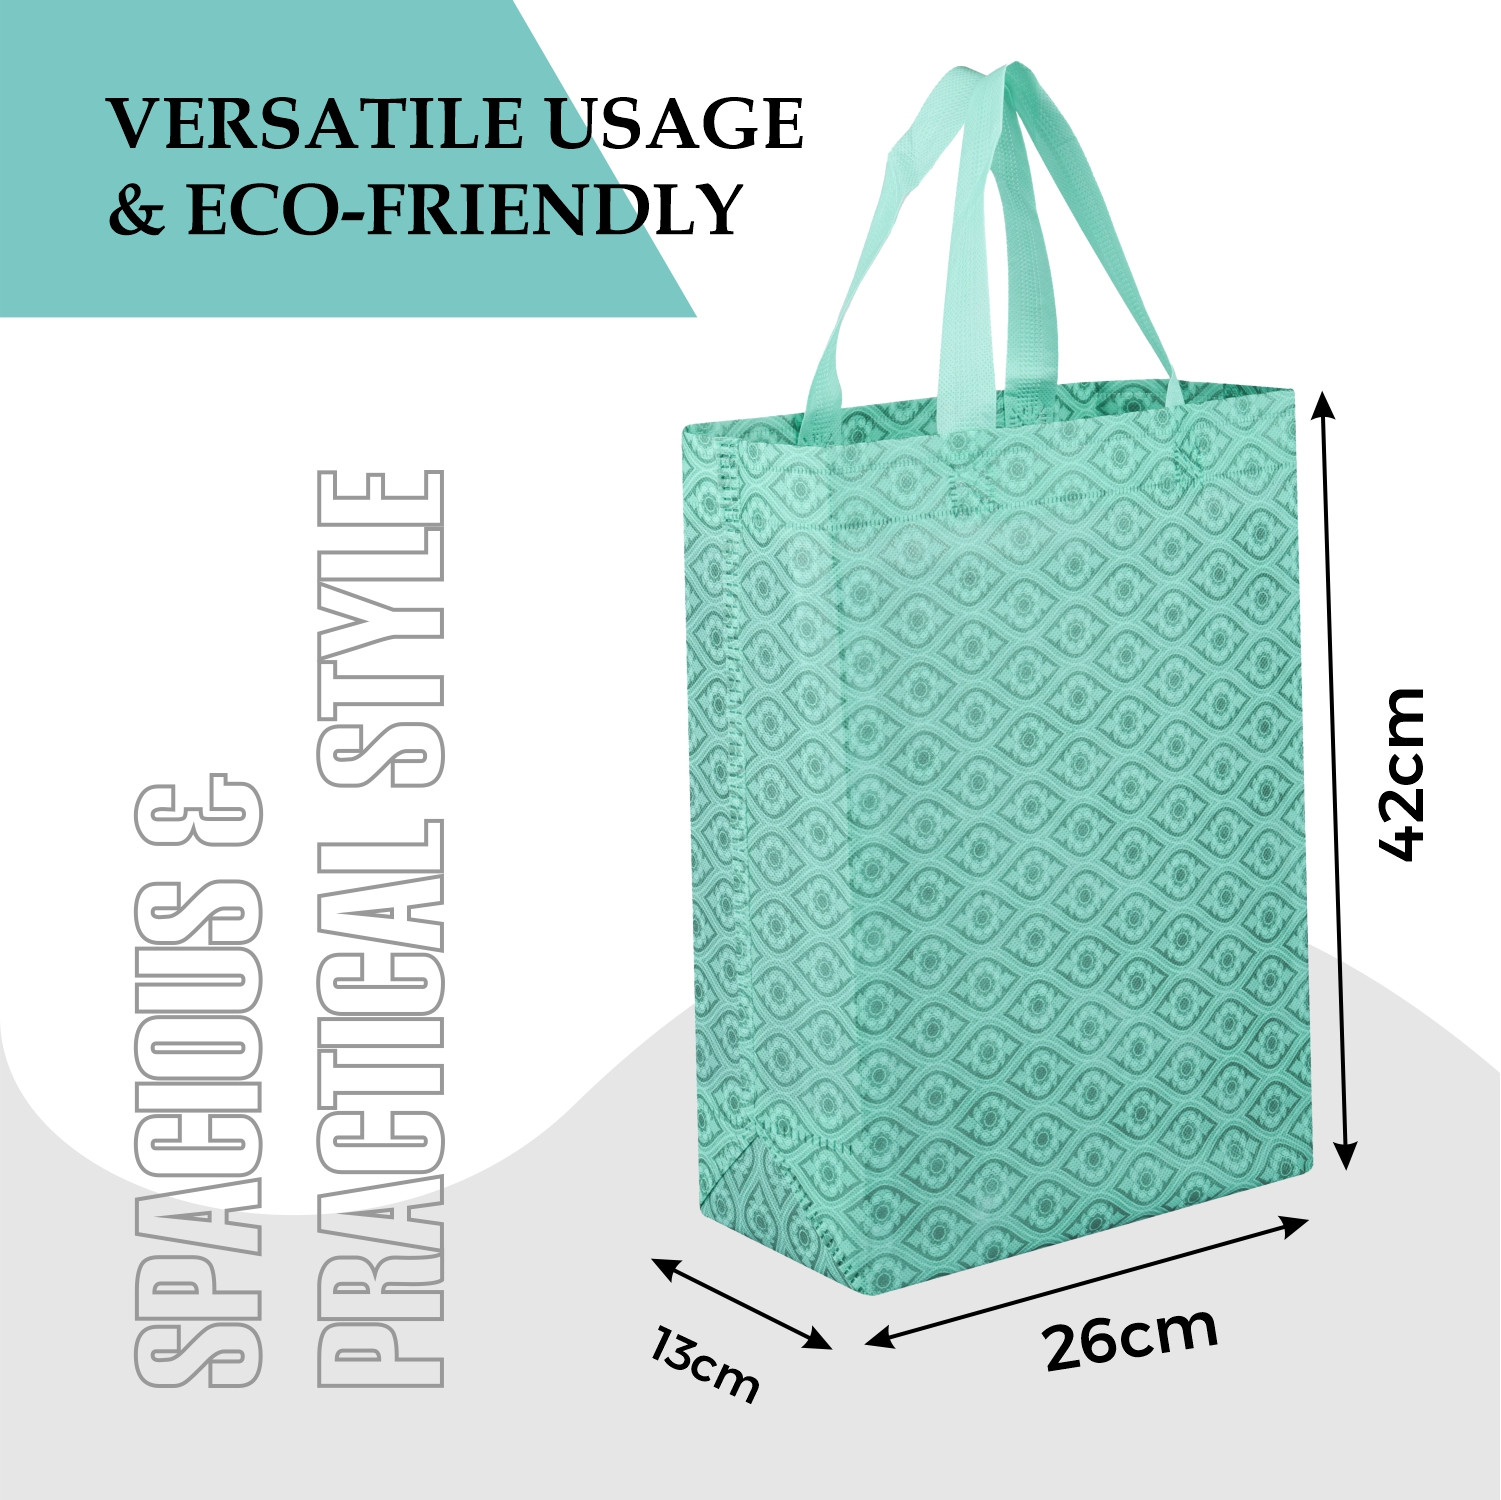 Kuber Industries Shopping Handbag | Grocery Handbag | Shopping Bag | Grocery Shopping Bag | Reusable Shopping Bags | Vegetable Bag | Eye-Print Carry Bag |Green